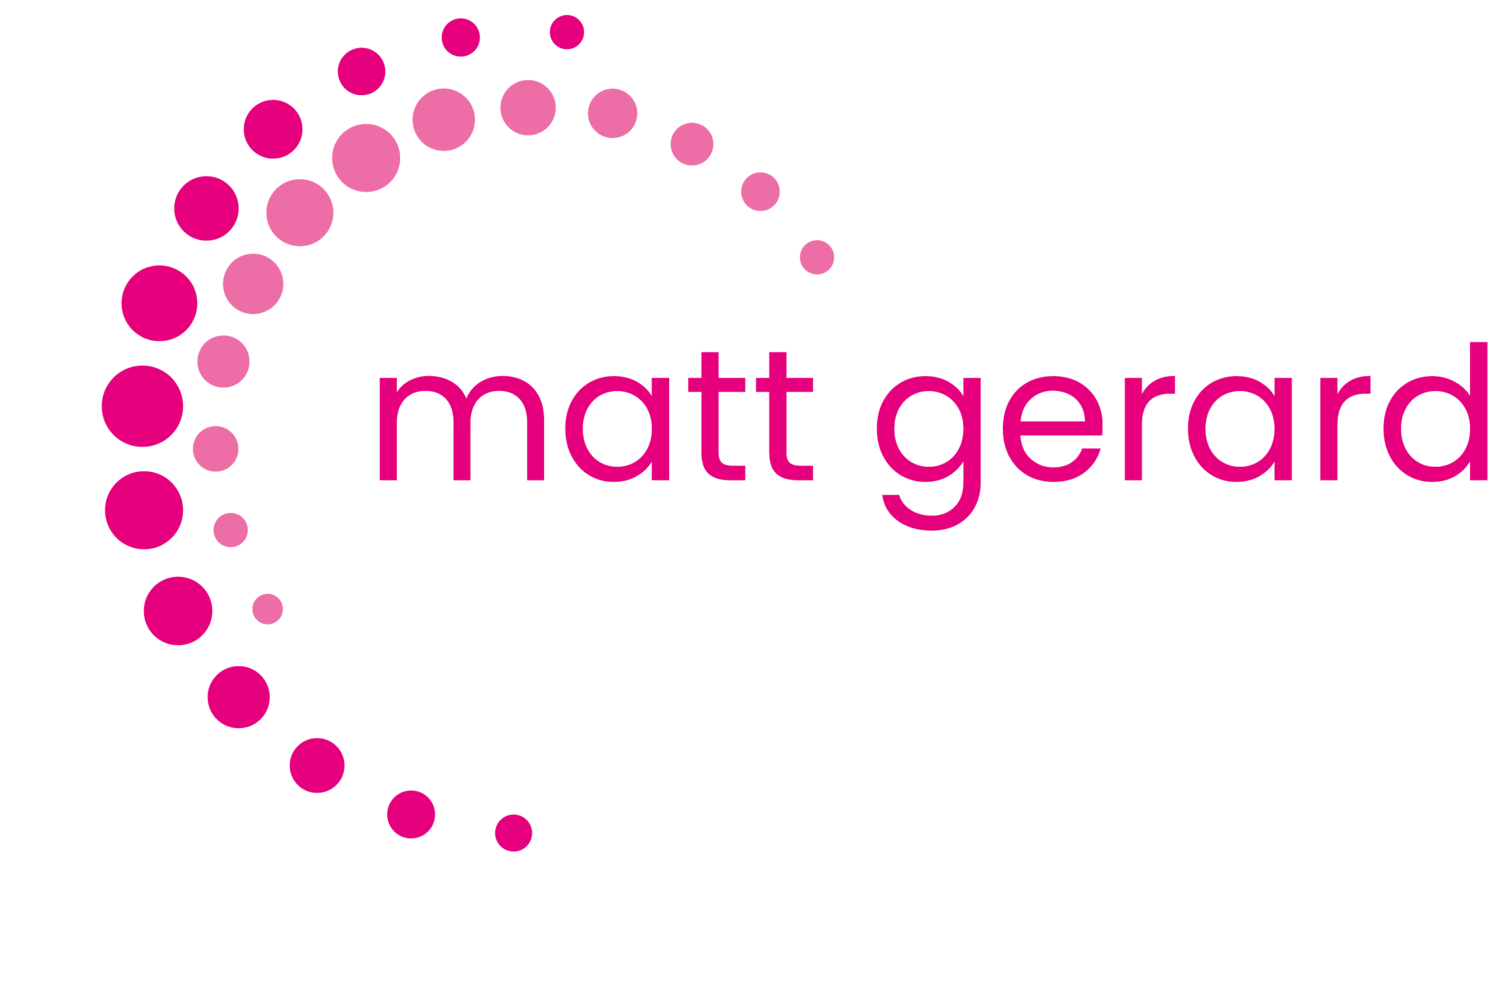 Matt Gerard Consultancy